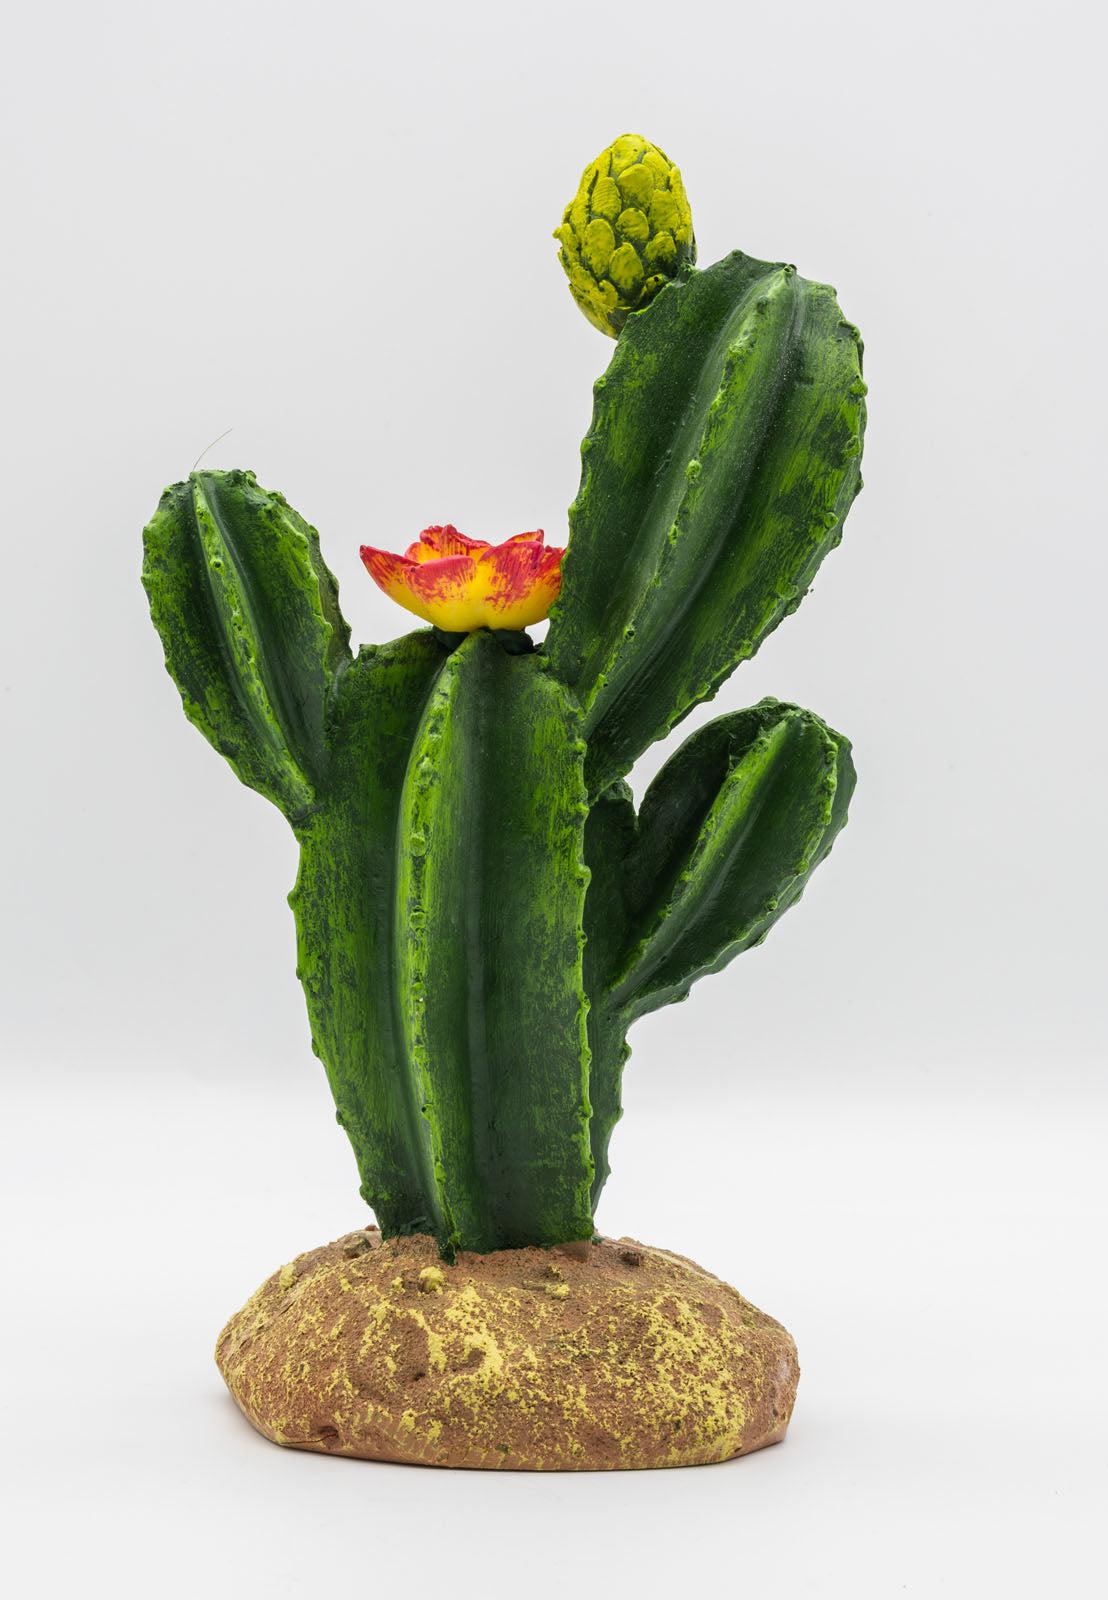 ProRep Resin Flowering Cactus